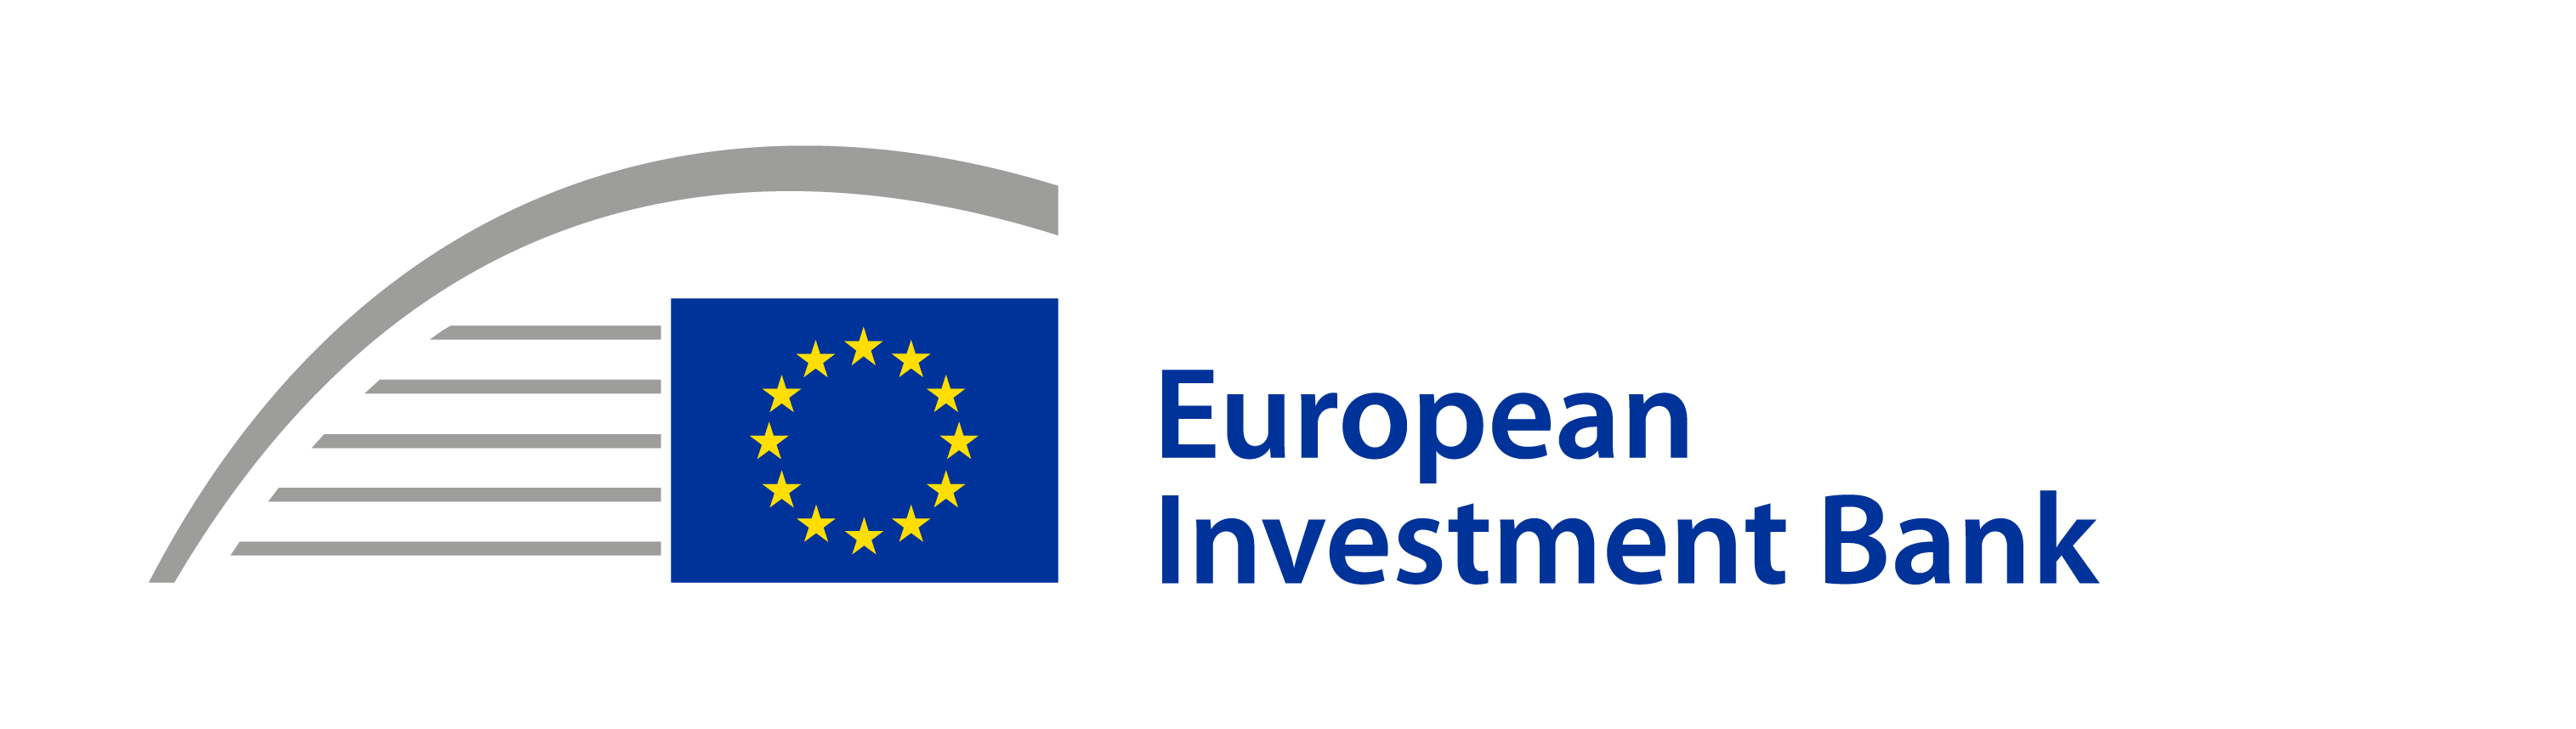 European Investment bank